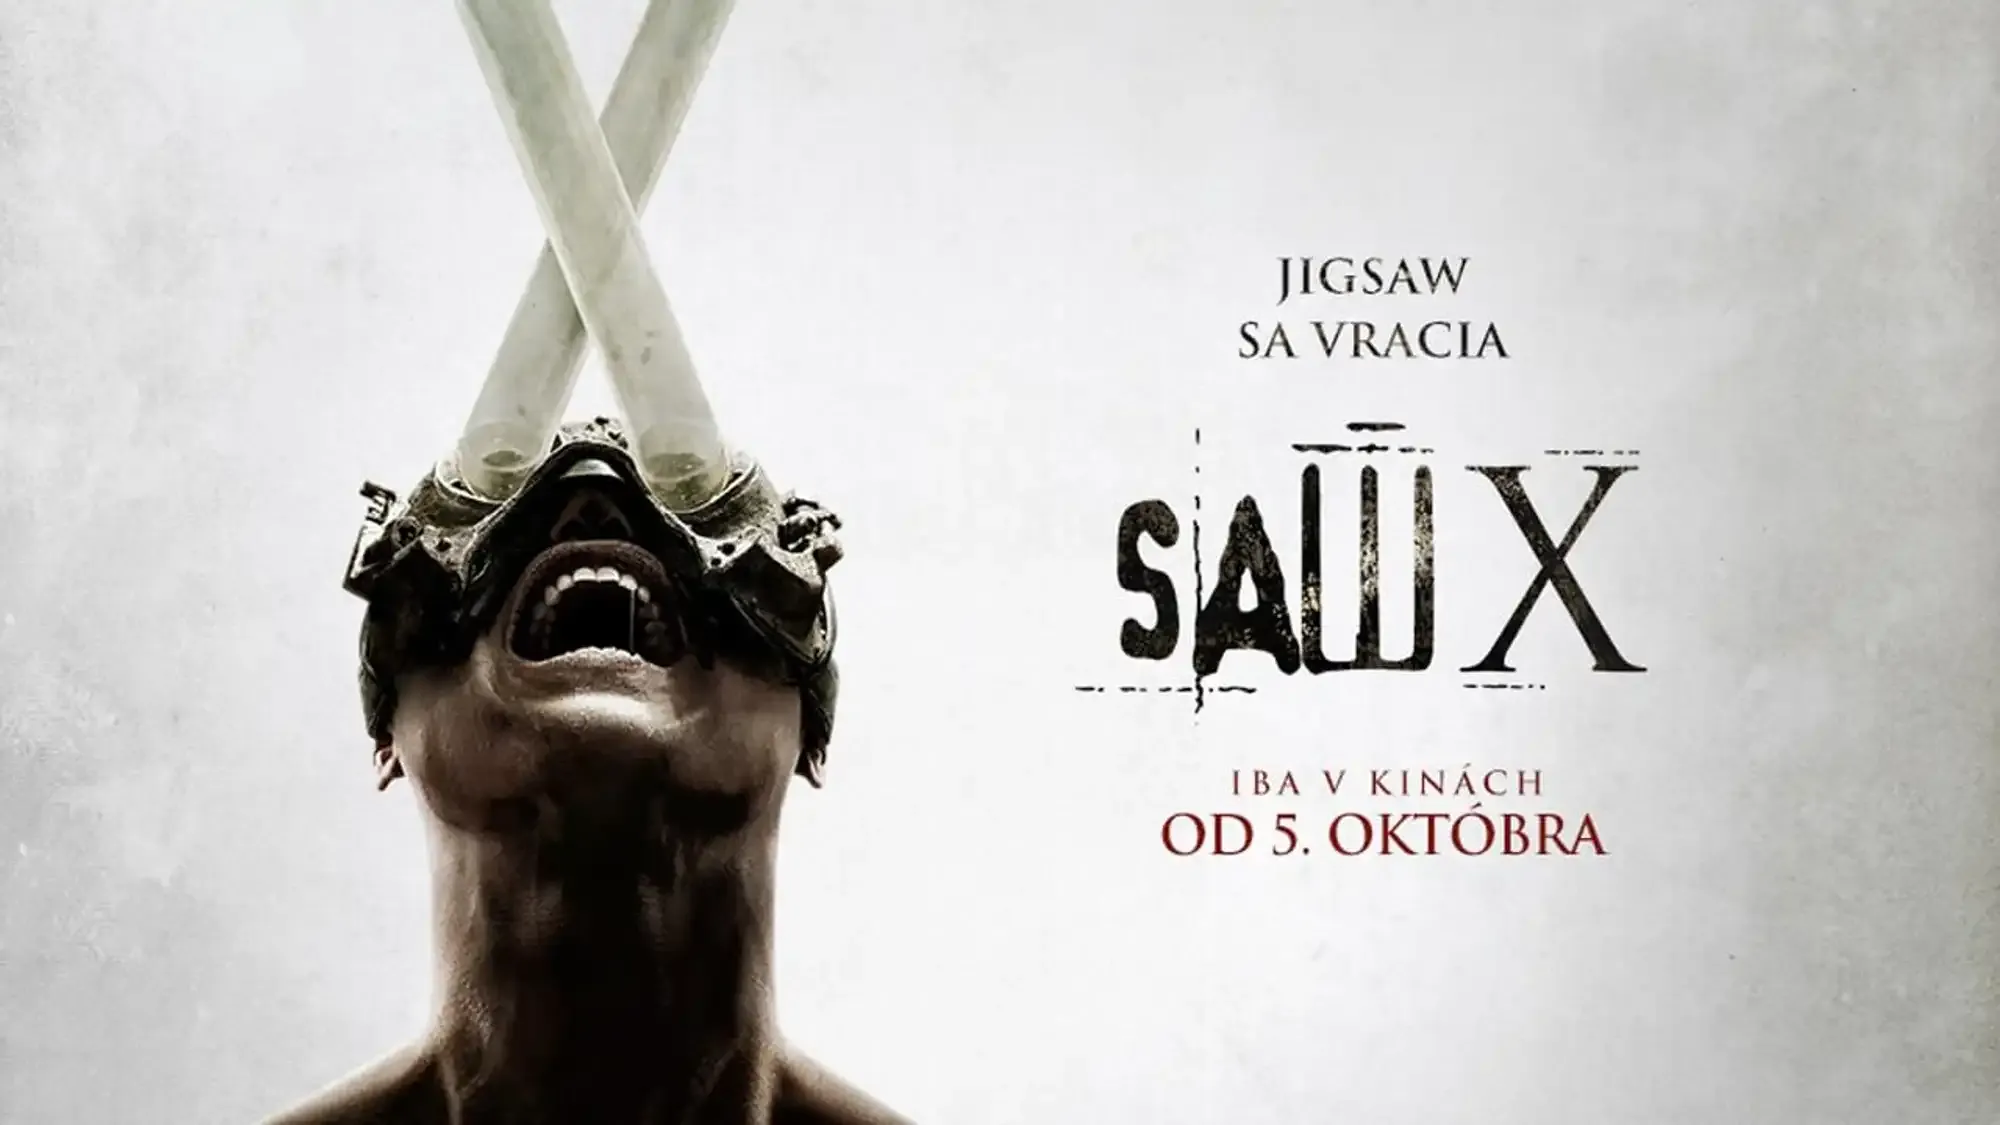 Saw X movie review